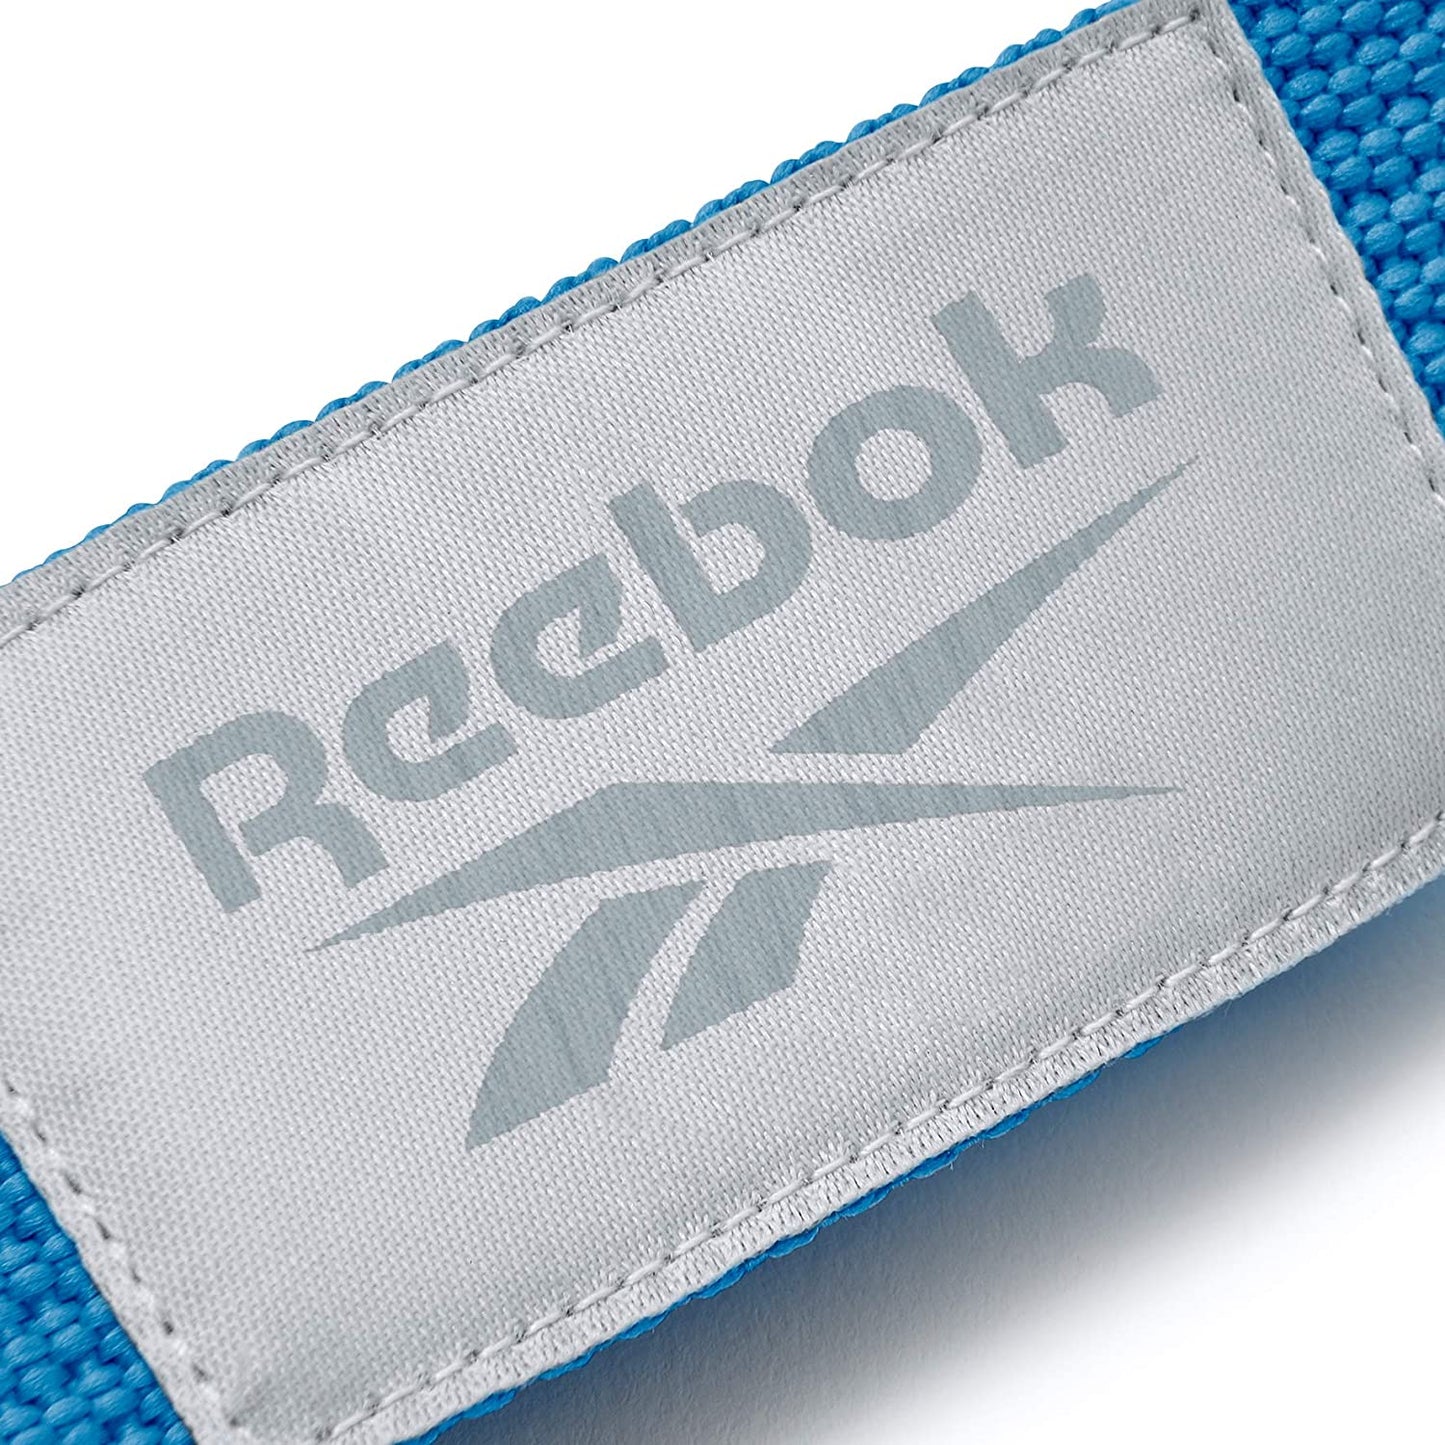 Reebok Yoga Strap 2.5 Meters, Blue - Best Price online Prokicksports.com